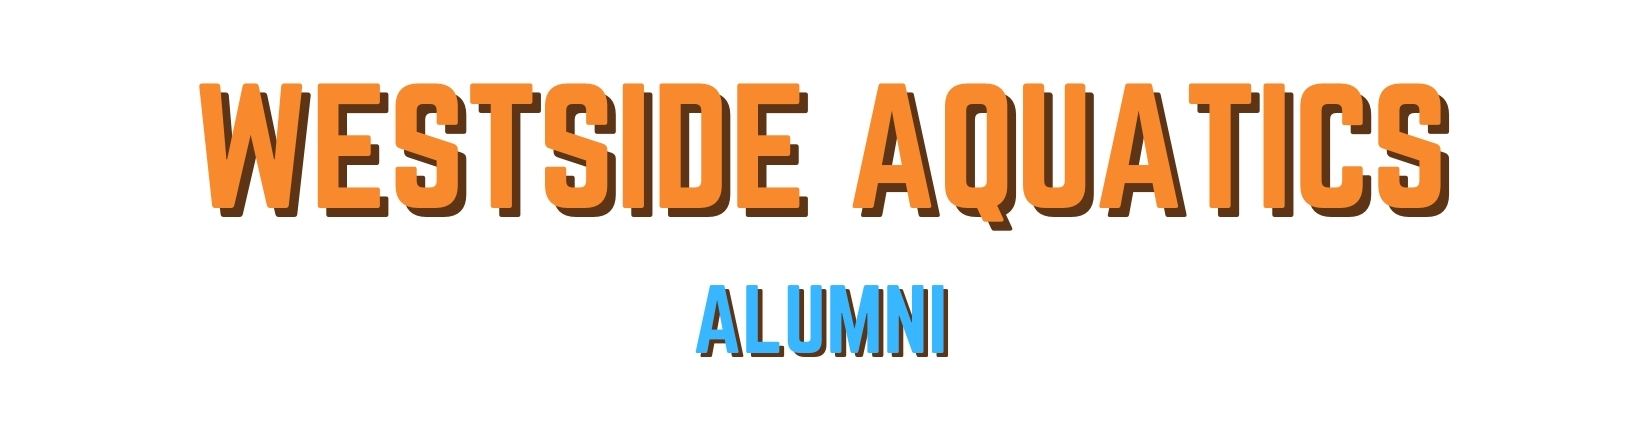 Westside Aquatics Alumni